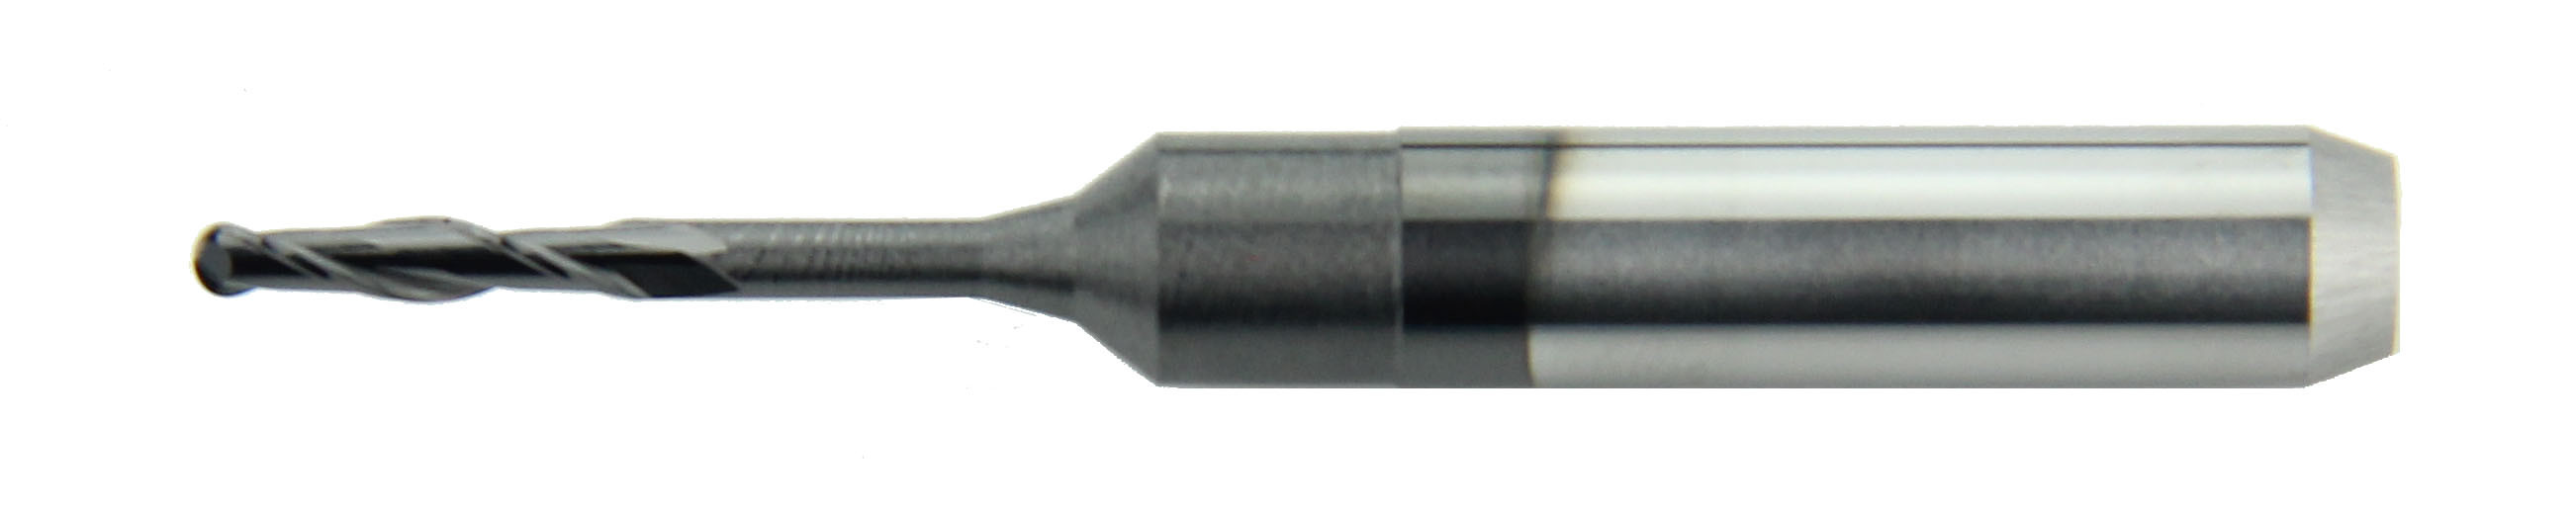 Zz-06-20-Dlc New Products Carbide Drill Bit for Zirconia